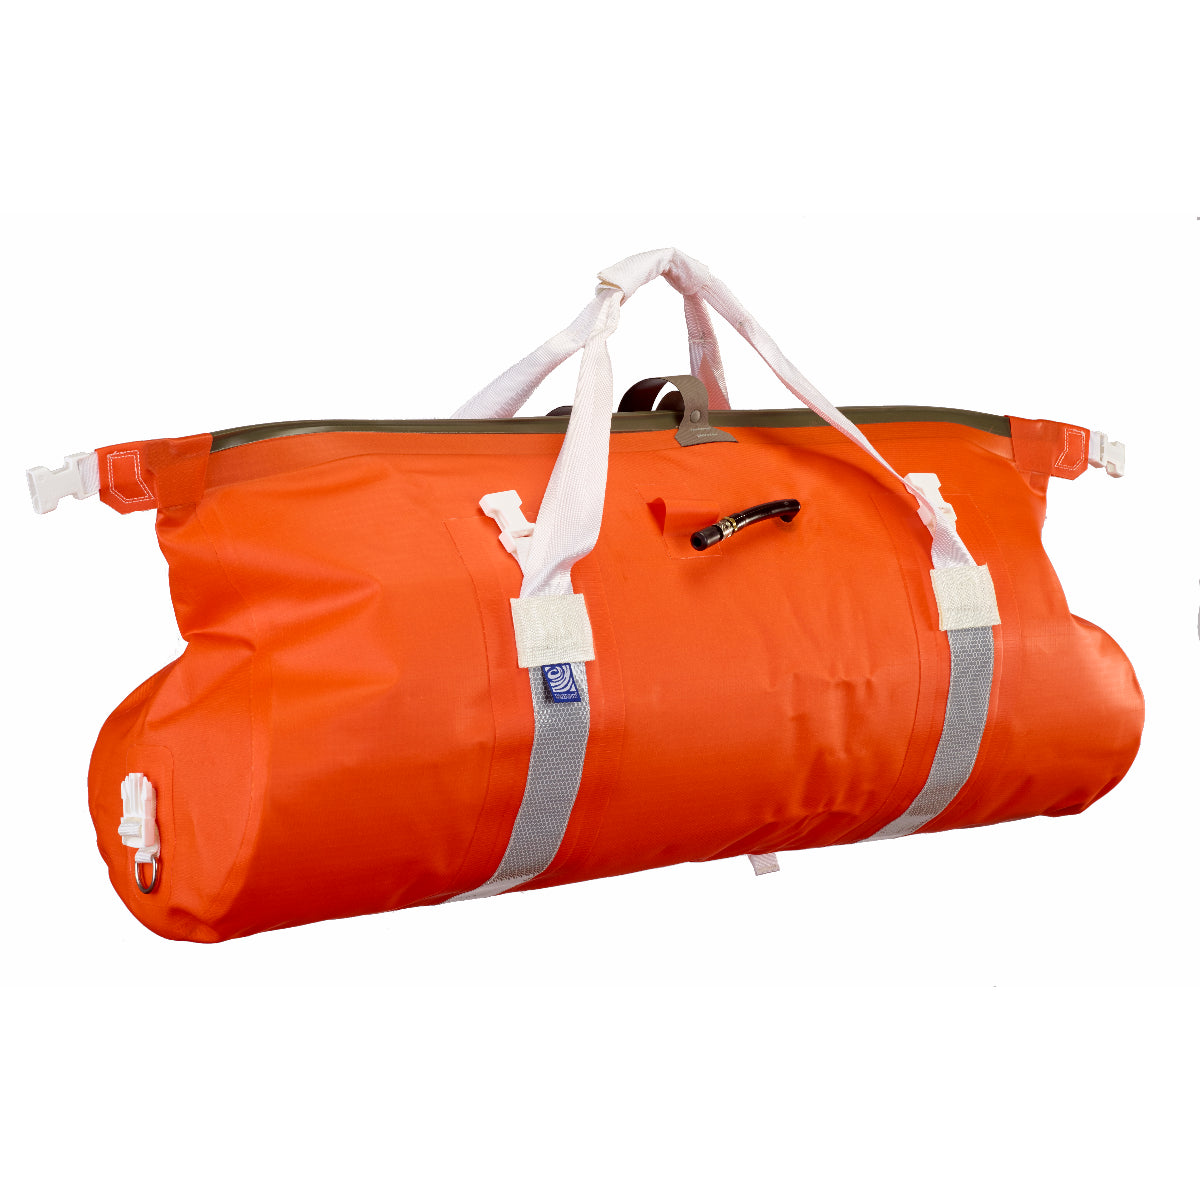 Watershed Survival Equipment Bag, LG